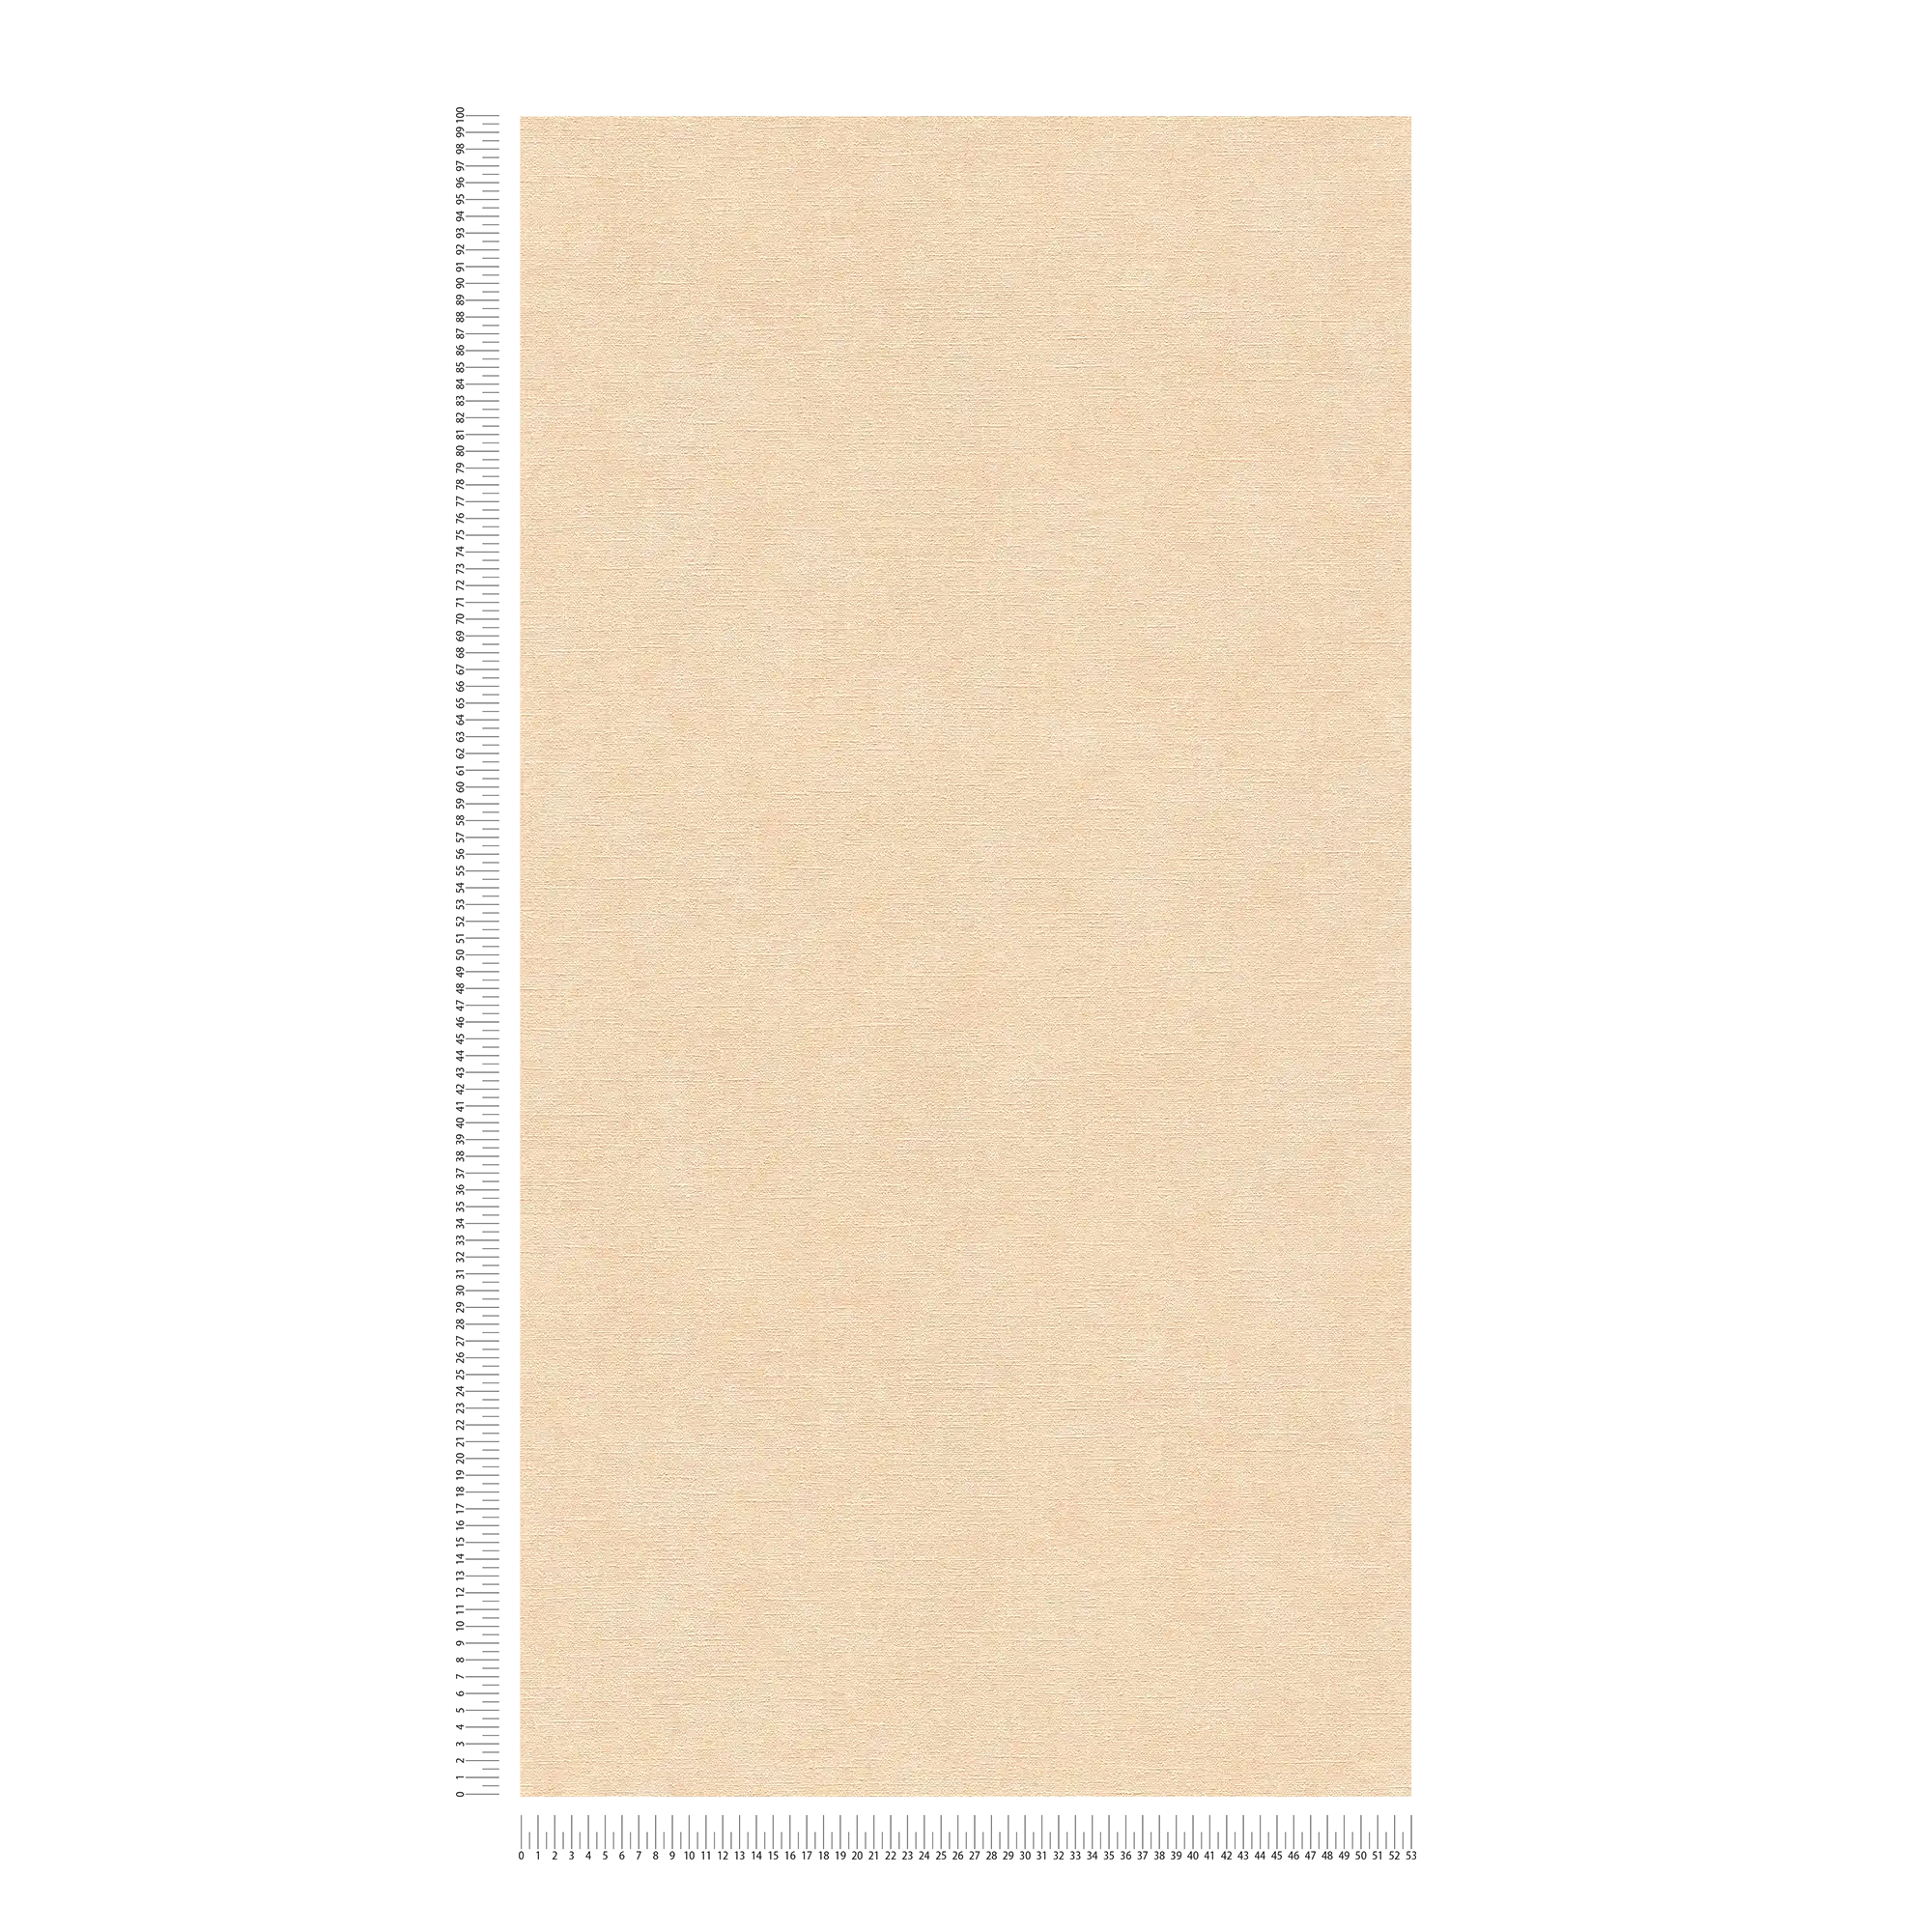             Carta da parati non tessuta a trama leggera, monocolore - beige, rosa
        